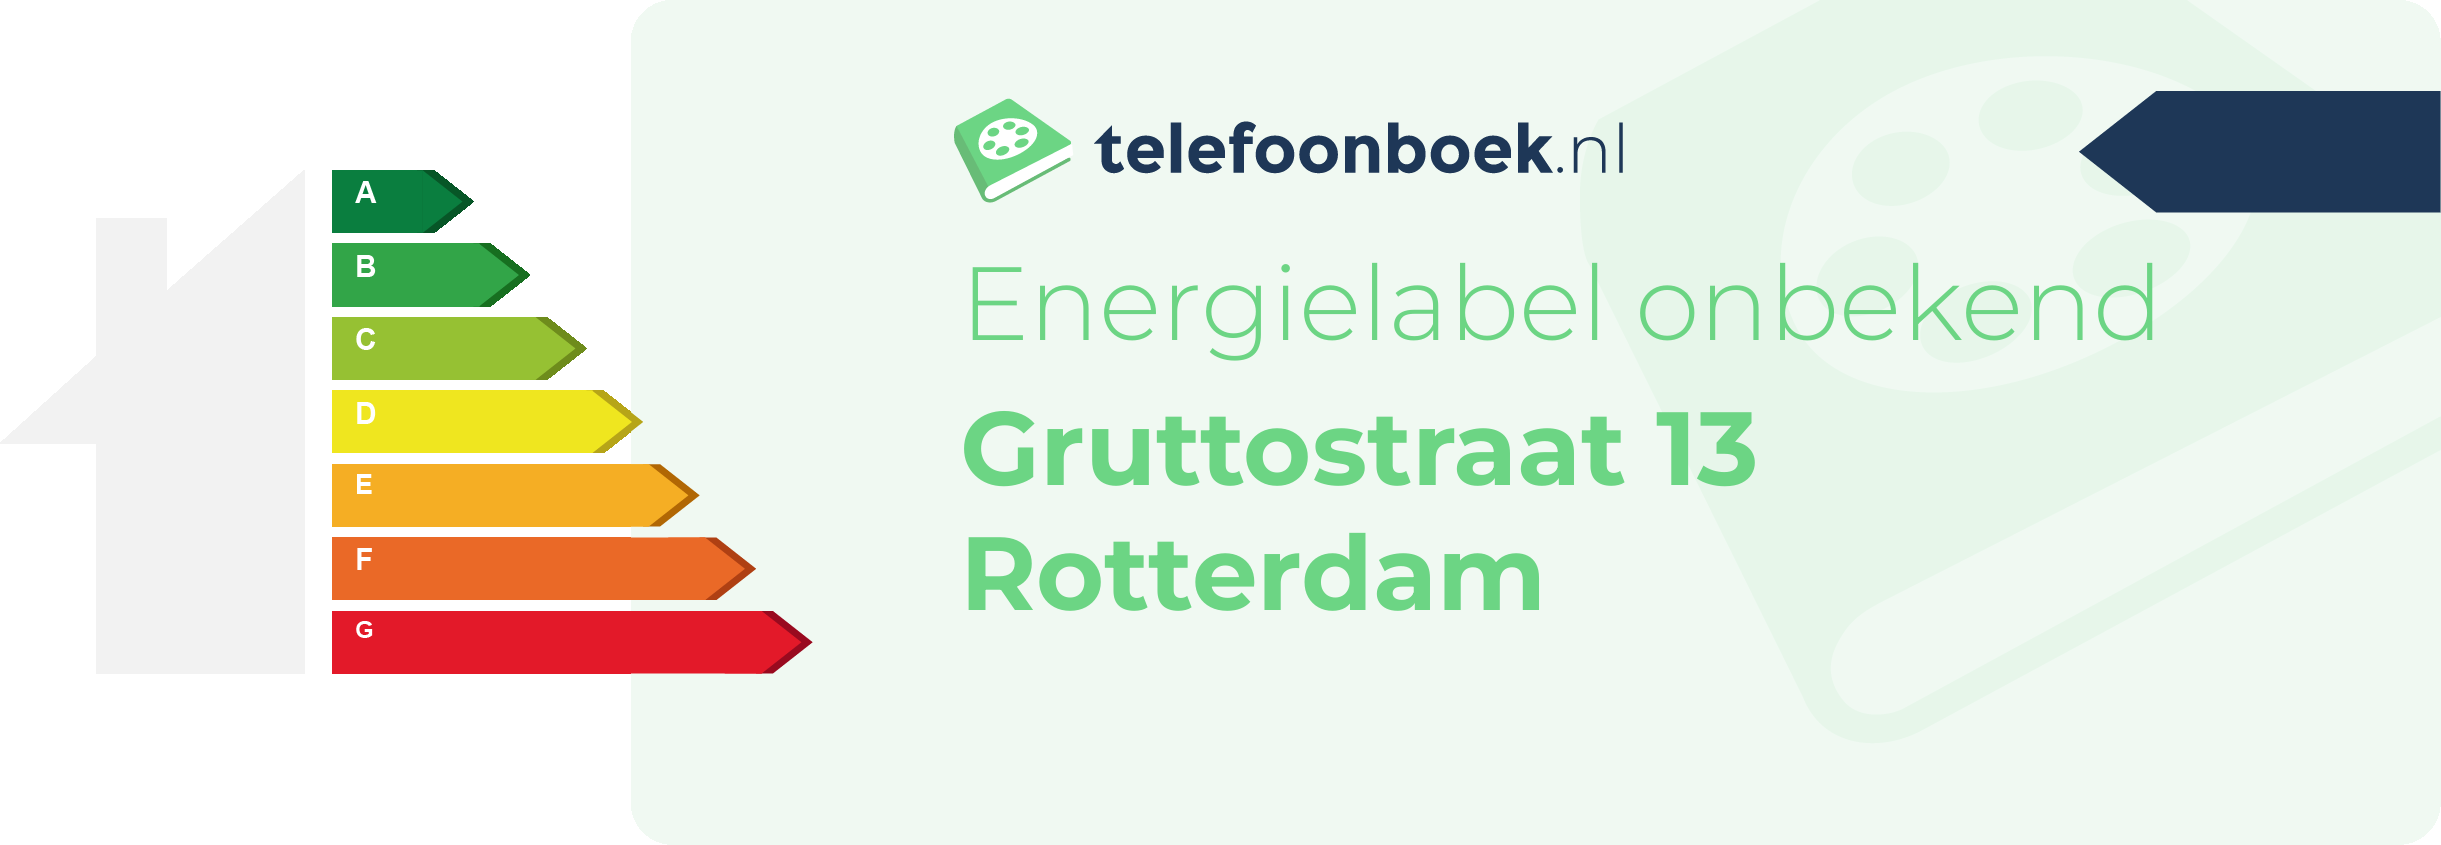 Energielabel Gruttostraat 13 Rotterdam